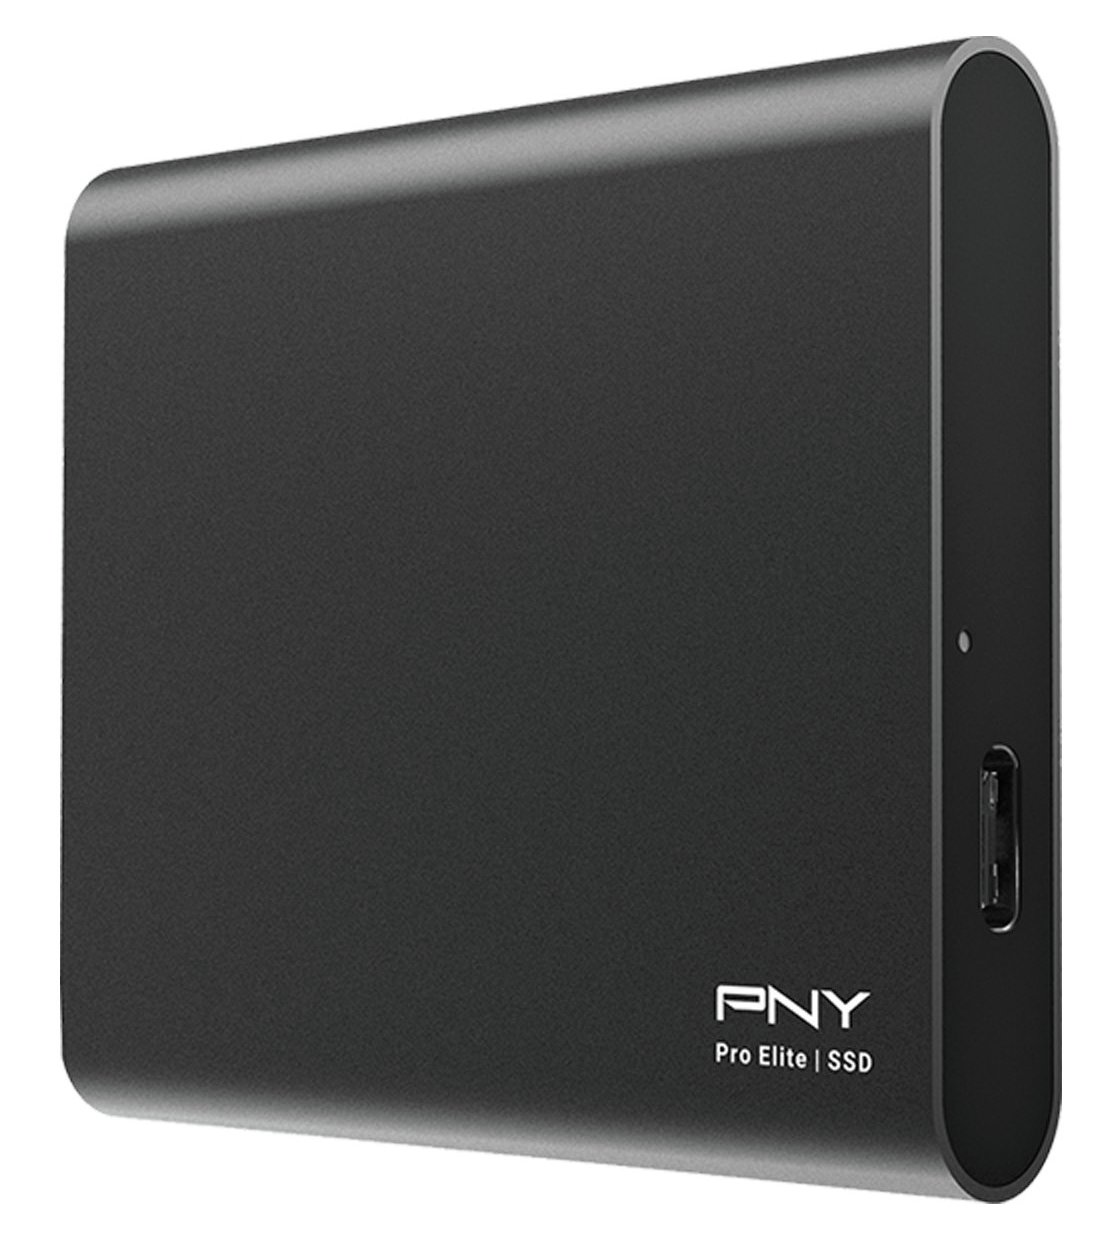 PNY Pro Elite Type-C 1TB Portable SSD Hard Drive Review